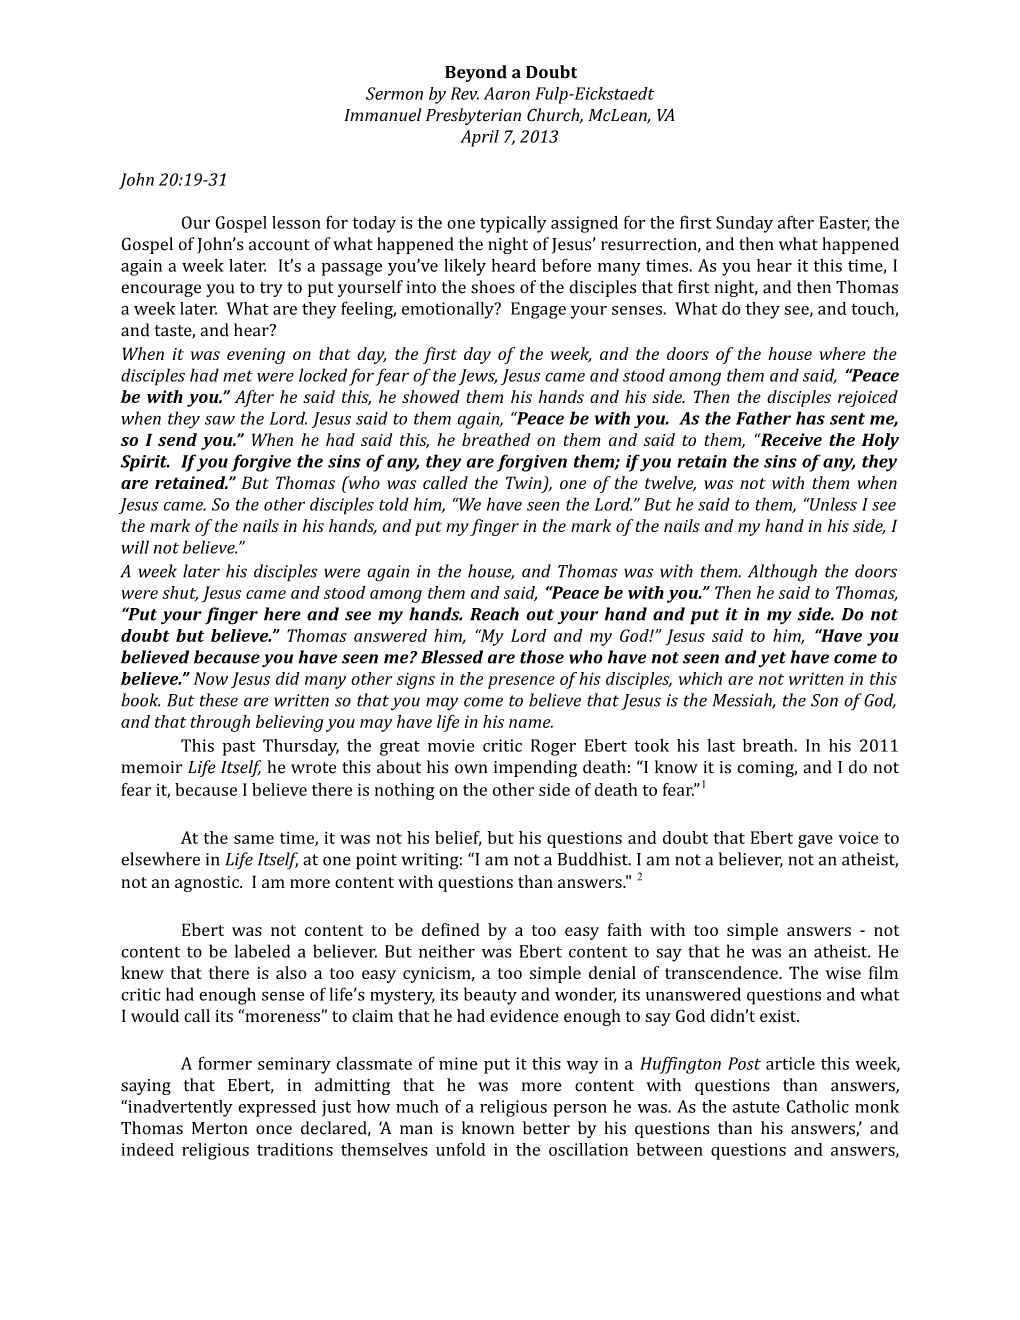 Beyond a Doubt Sermon by Rev. Aaron Fulp-Eickstaedt Immanuel Presbyterian Church, Mclean, VA April 7, 2013